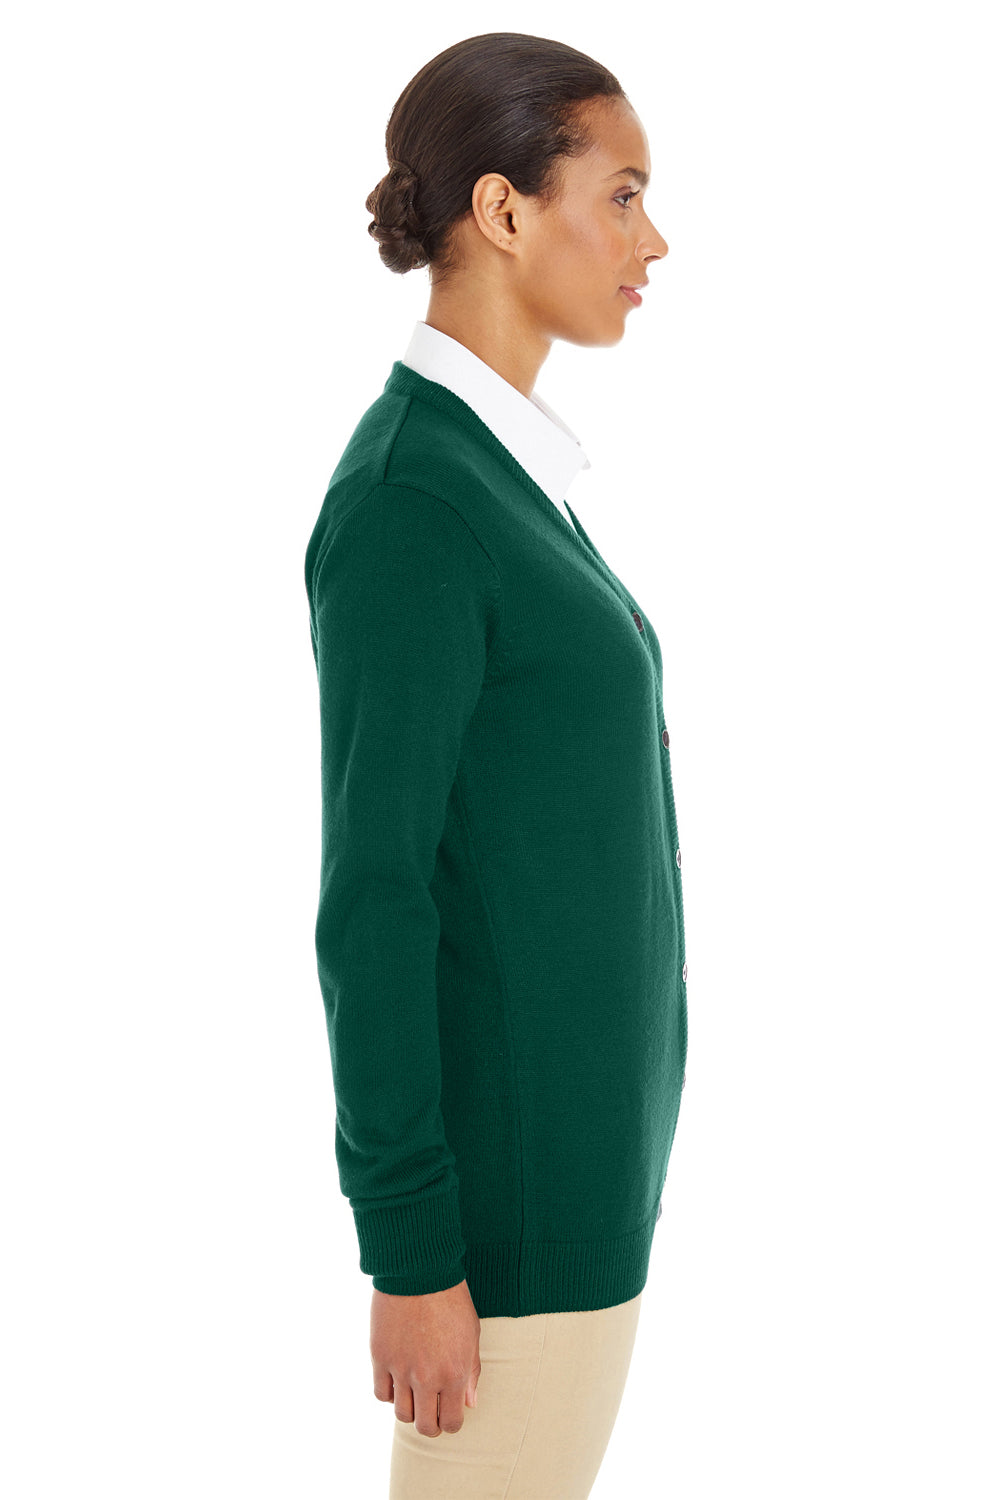 Harriton M425W Womens Pilbloc Button Down Lone Sleeve Cardigan Sweater Hunter Green Side